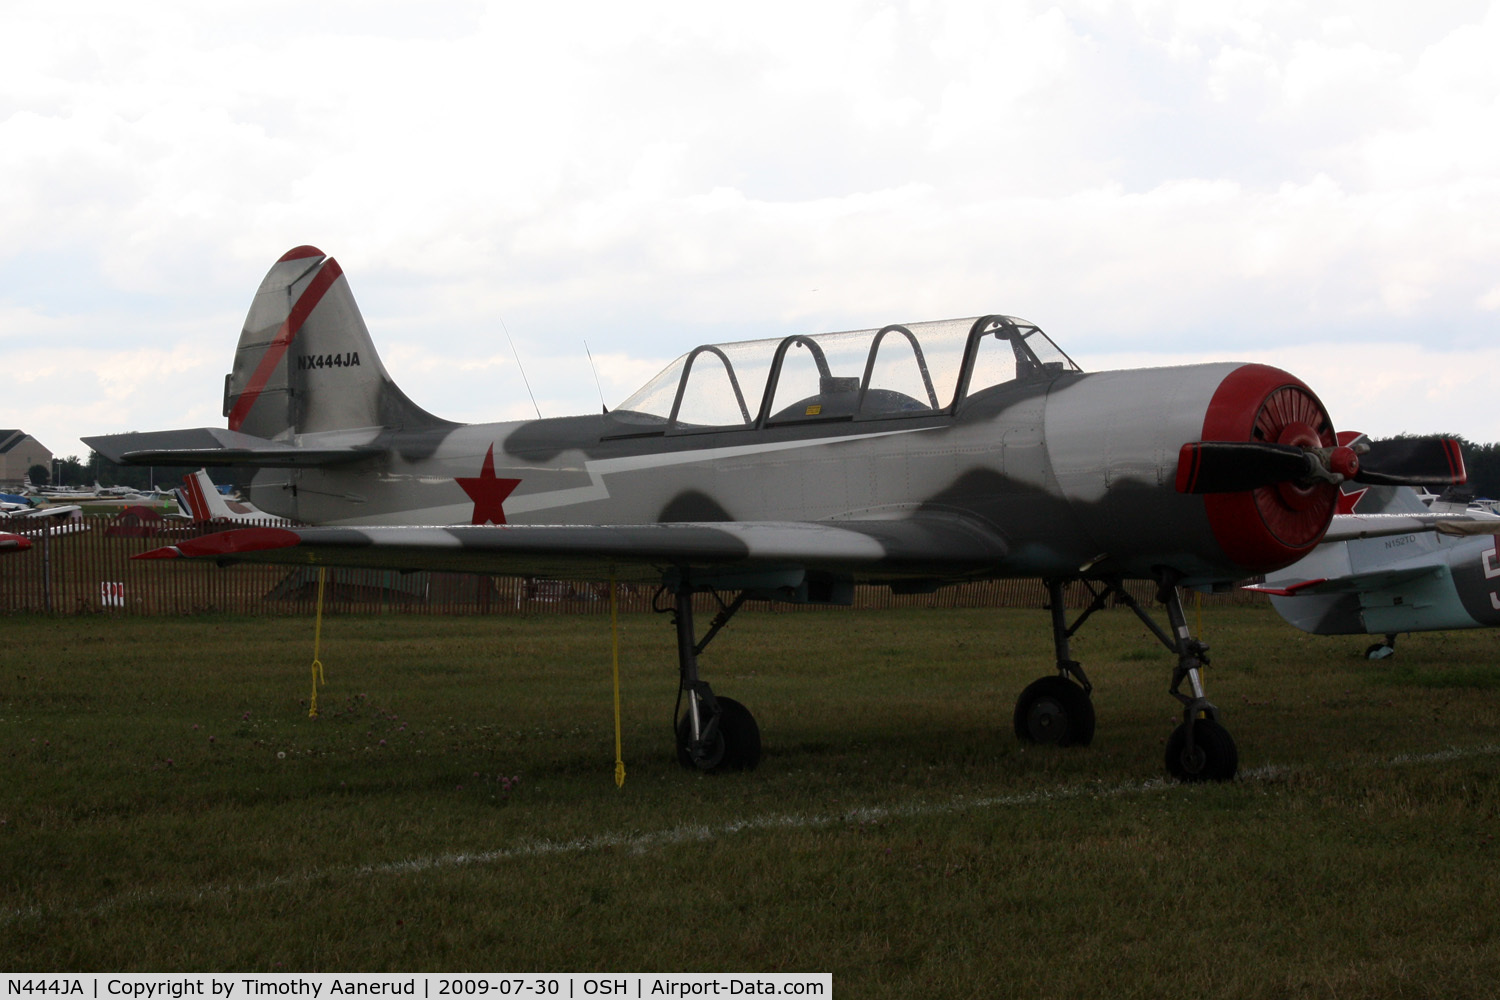 N444JA, 1993 Yakovlev (Aerostar) Yak-52 C/N 9311613, 1993 S C Aerostar S A YAK-52, c/n: 9311613